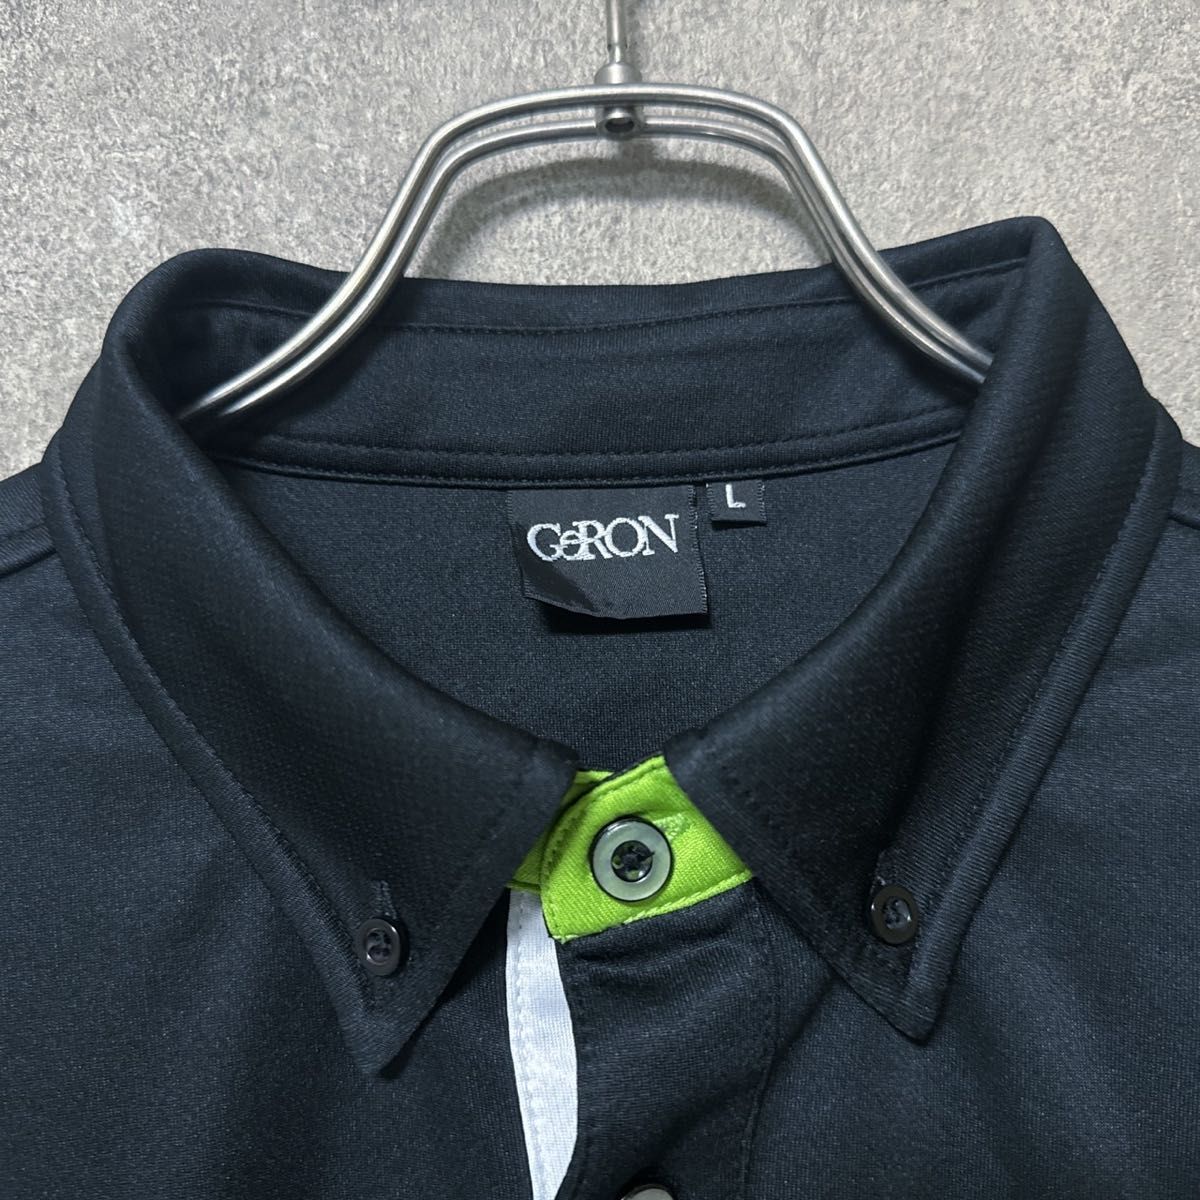 elite grips エリートグリップ ロゴ 刺繍 ポロシャツ ゴルフウェア メンズ シャツ スポーツ ウェア 半袖